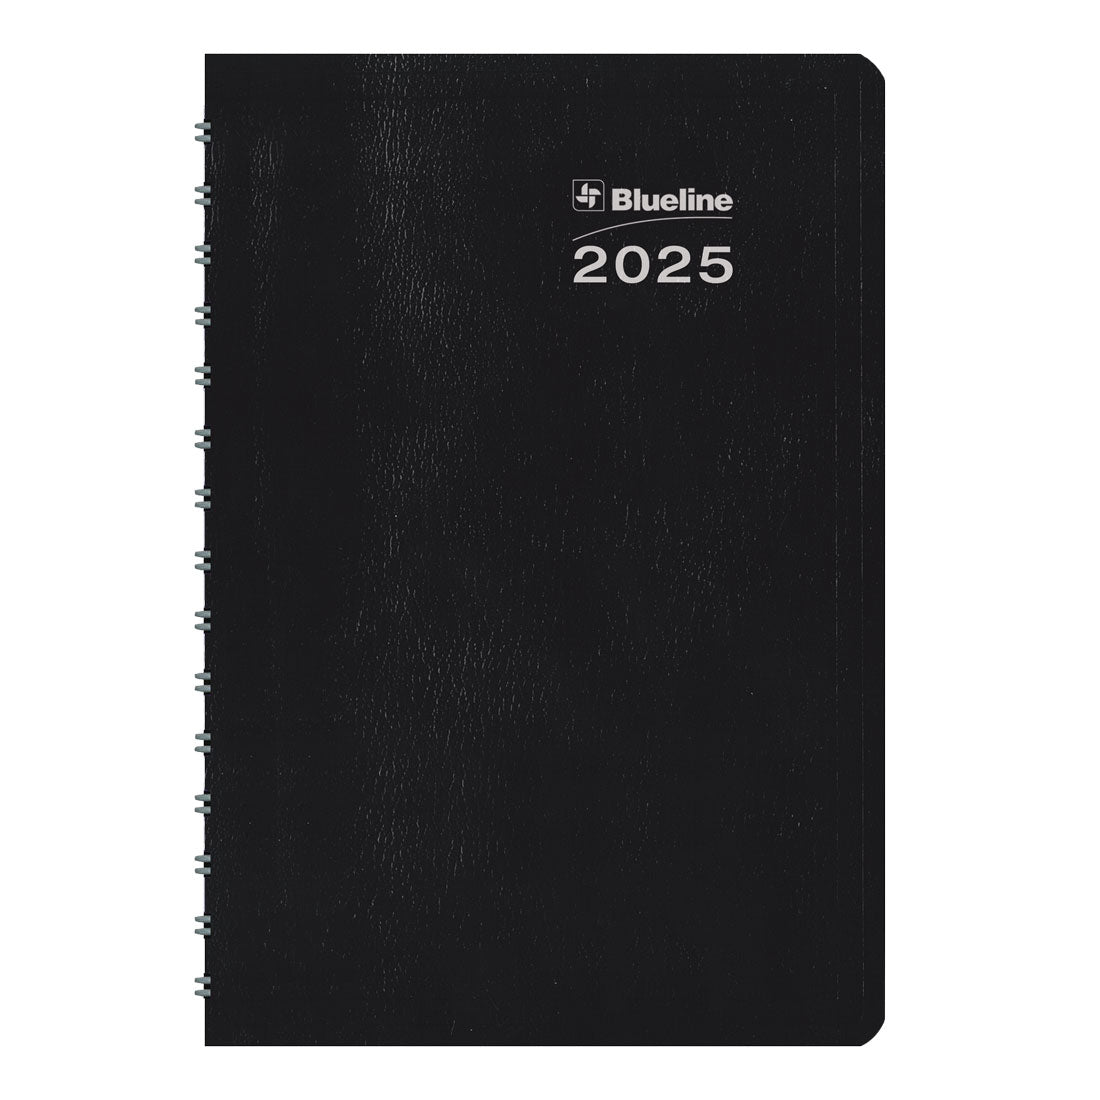 DuraGlobe™ Daily Planner 2025, English, Black, C210.21T